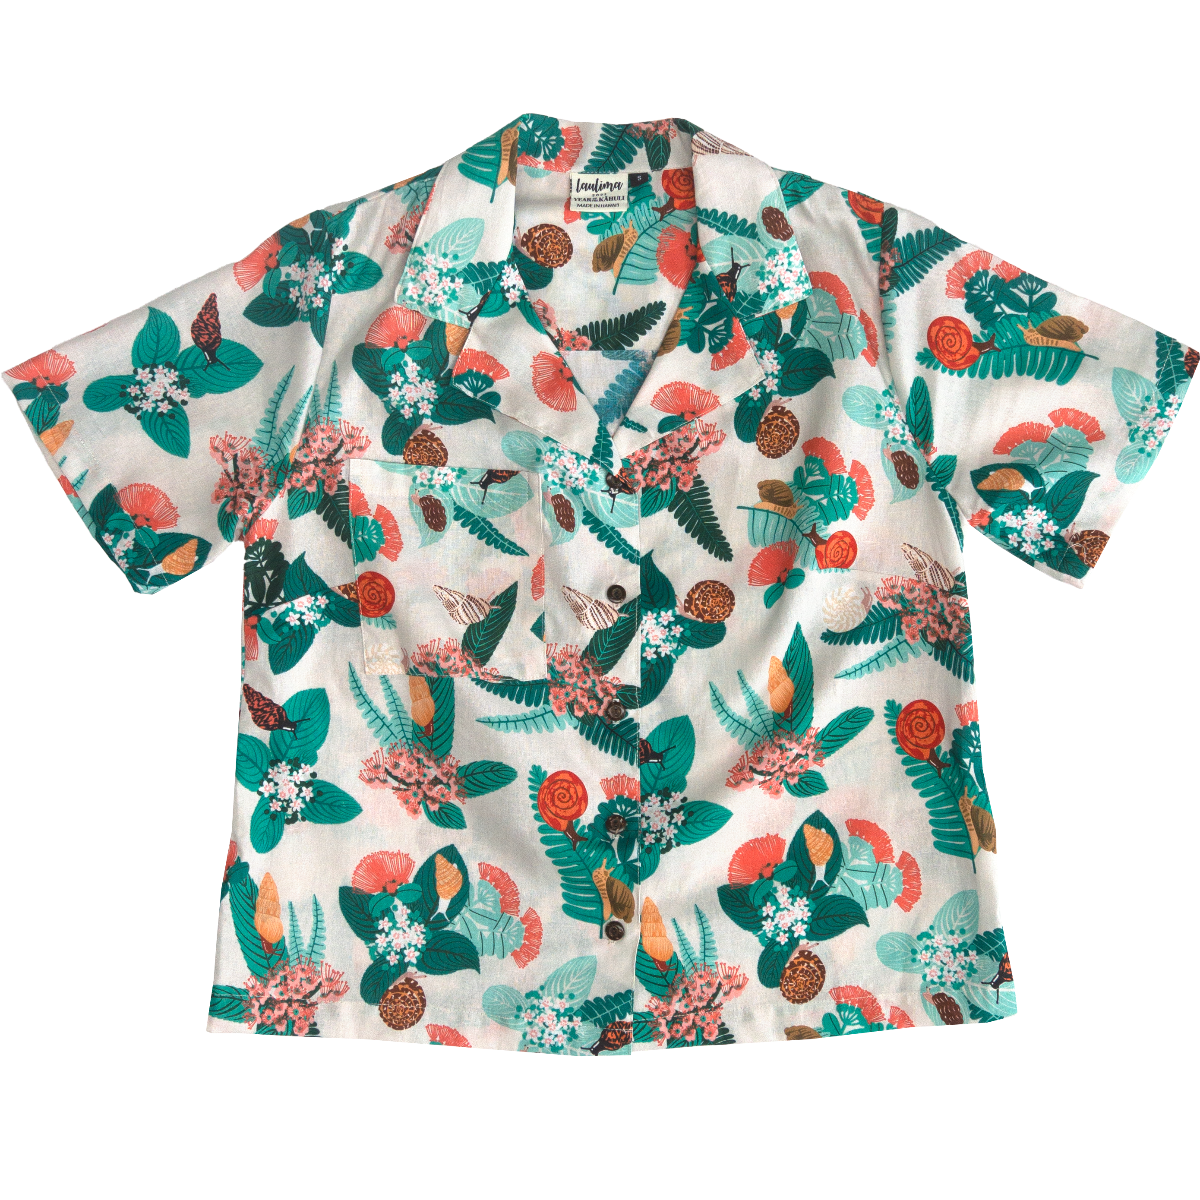 Kāhuli Camp Shirt featuring Hawaiian land snails. Made in Hawaii. Cotton linen blend fabric button down with a wide collar.